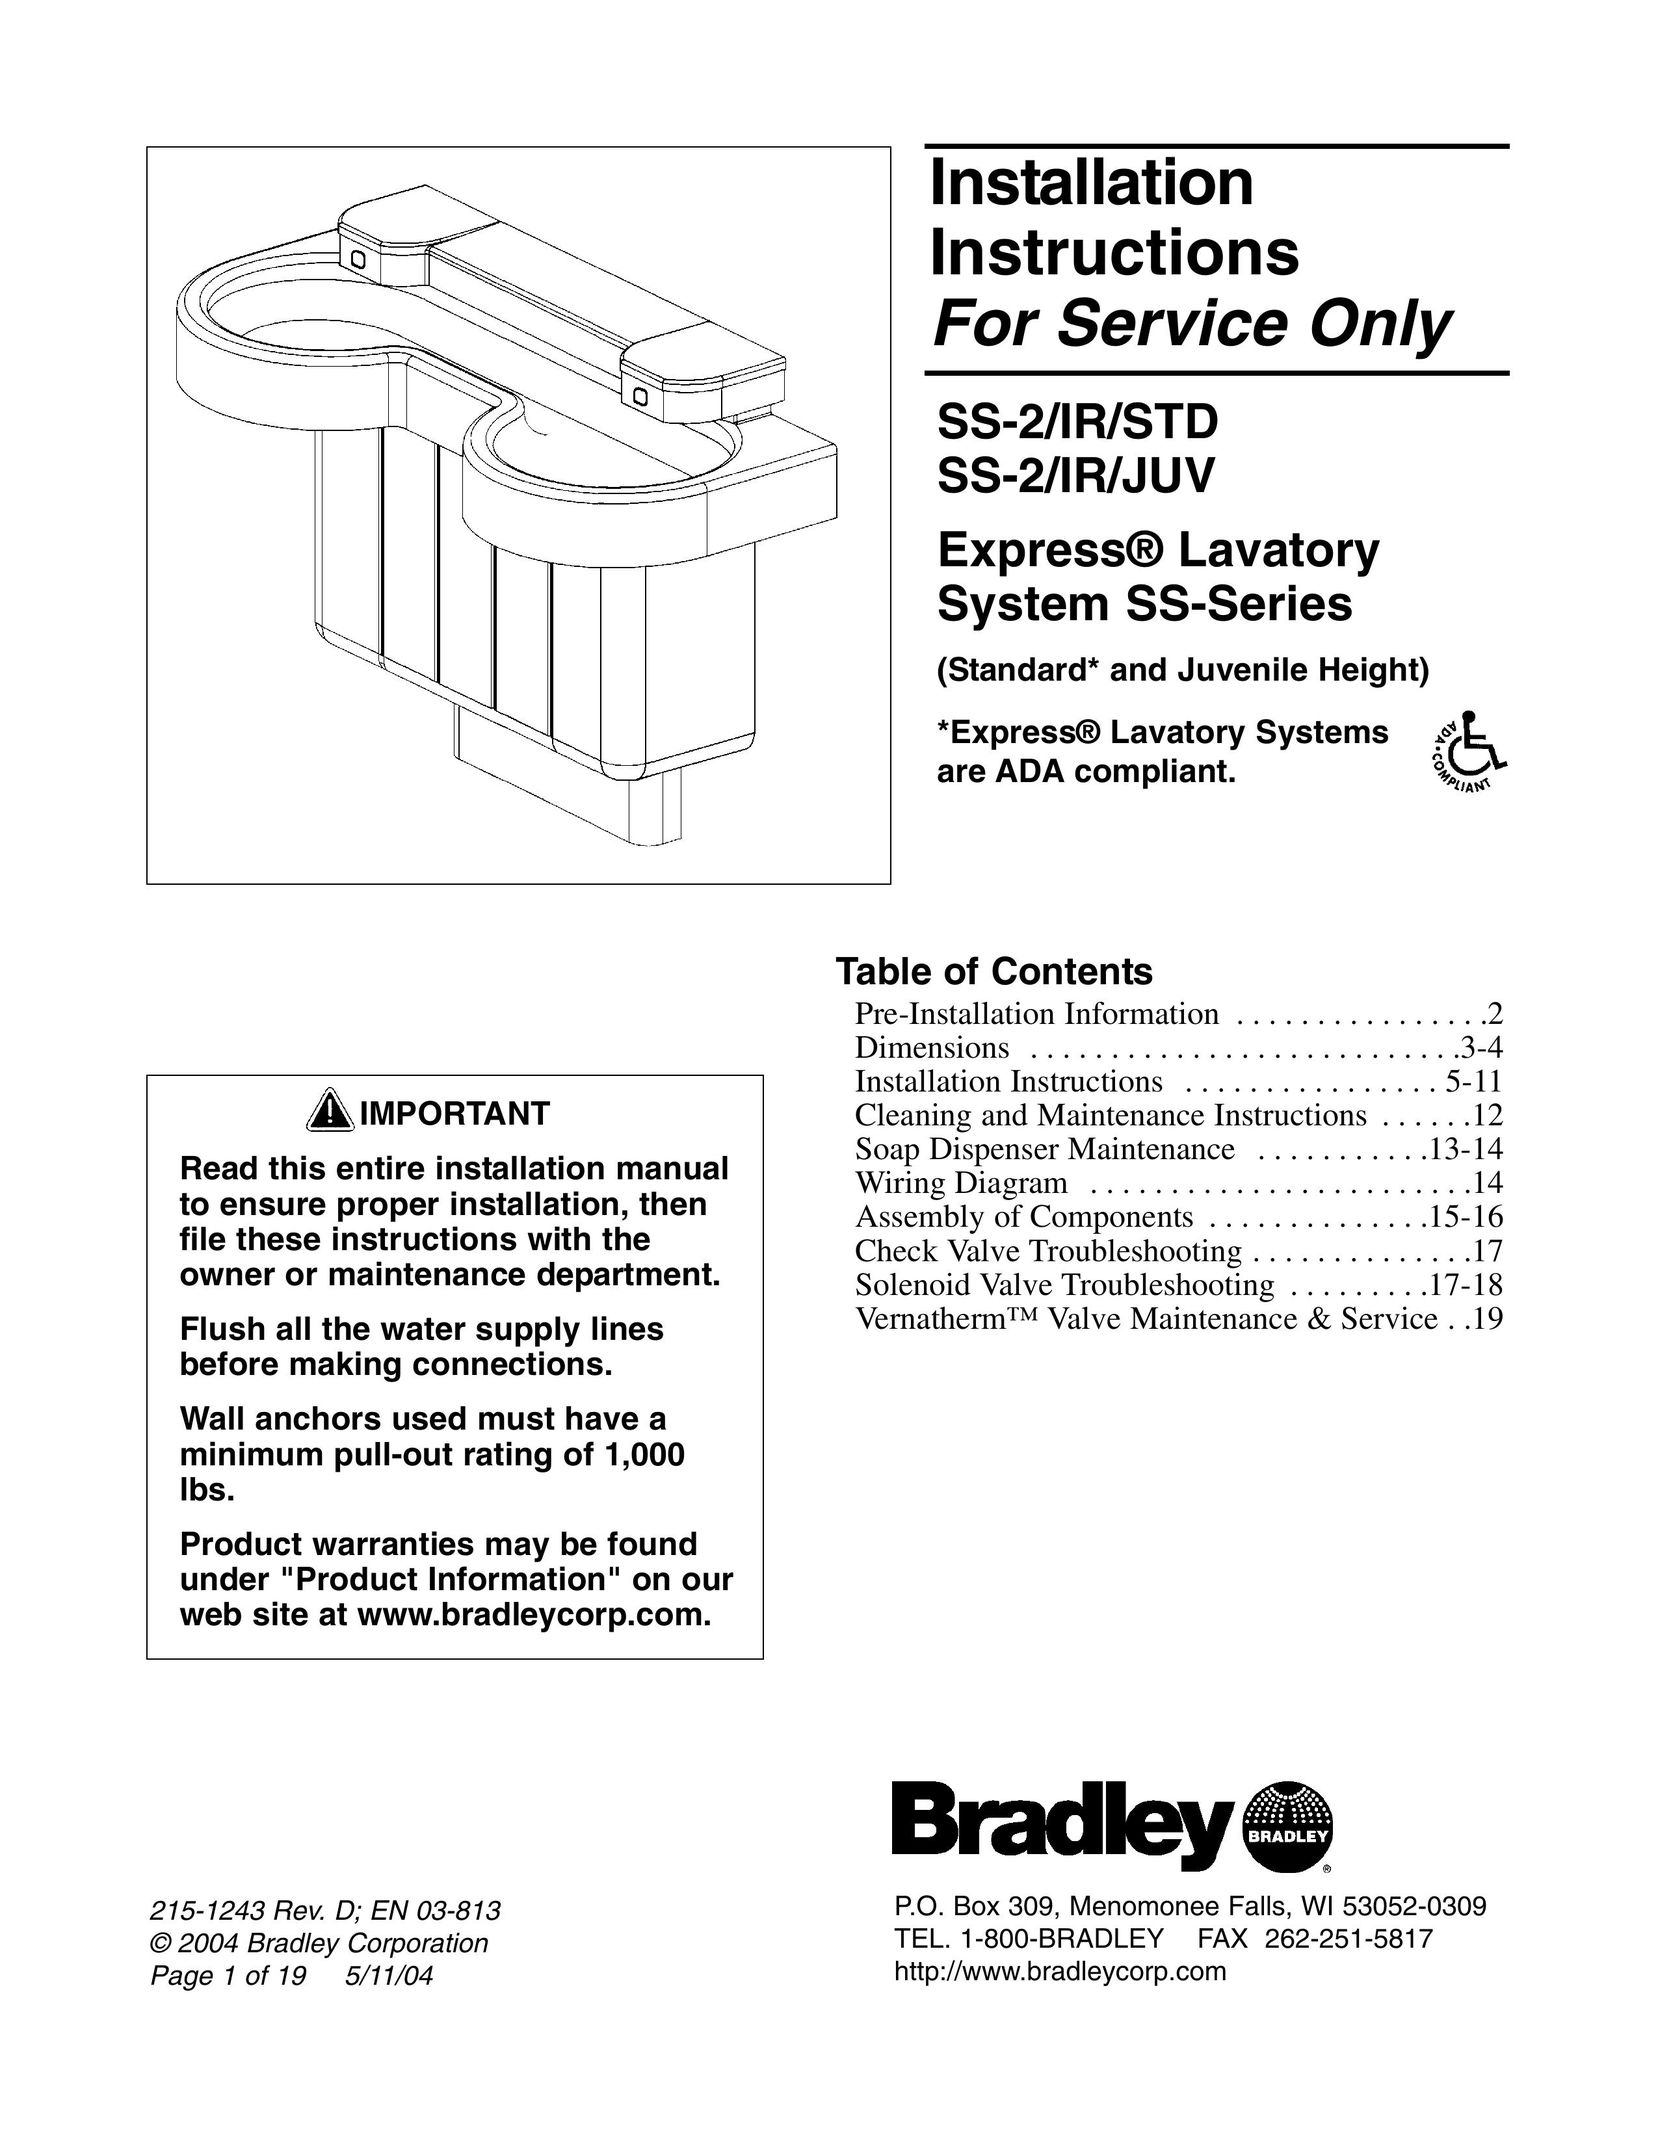 Bradley Smoker SS-2/IR/STD Plumbing Product User Manual